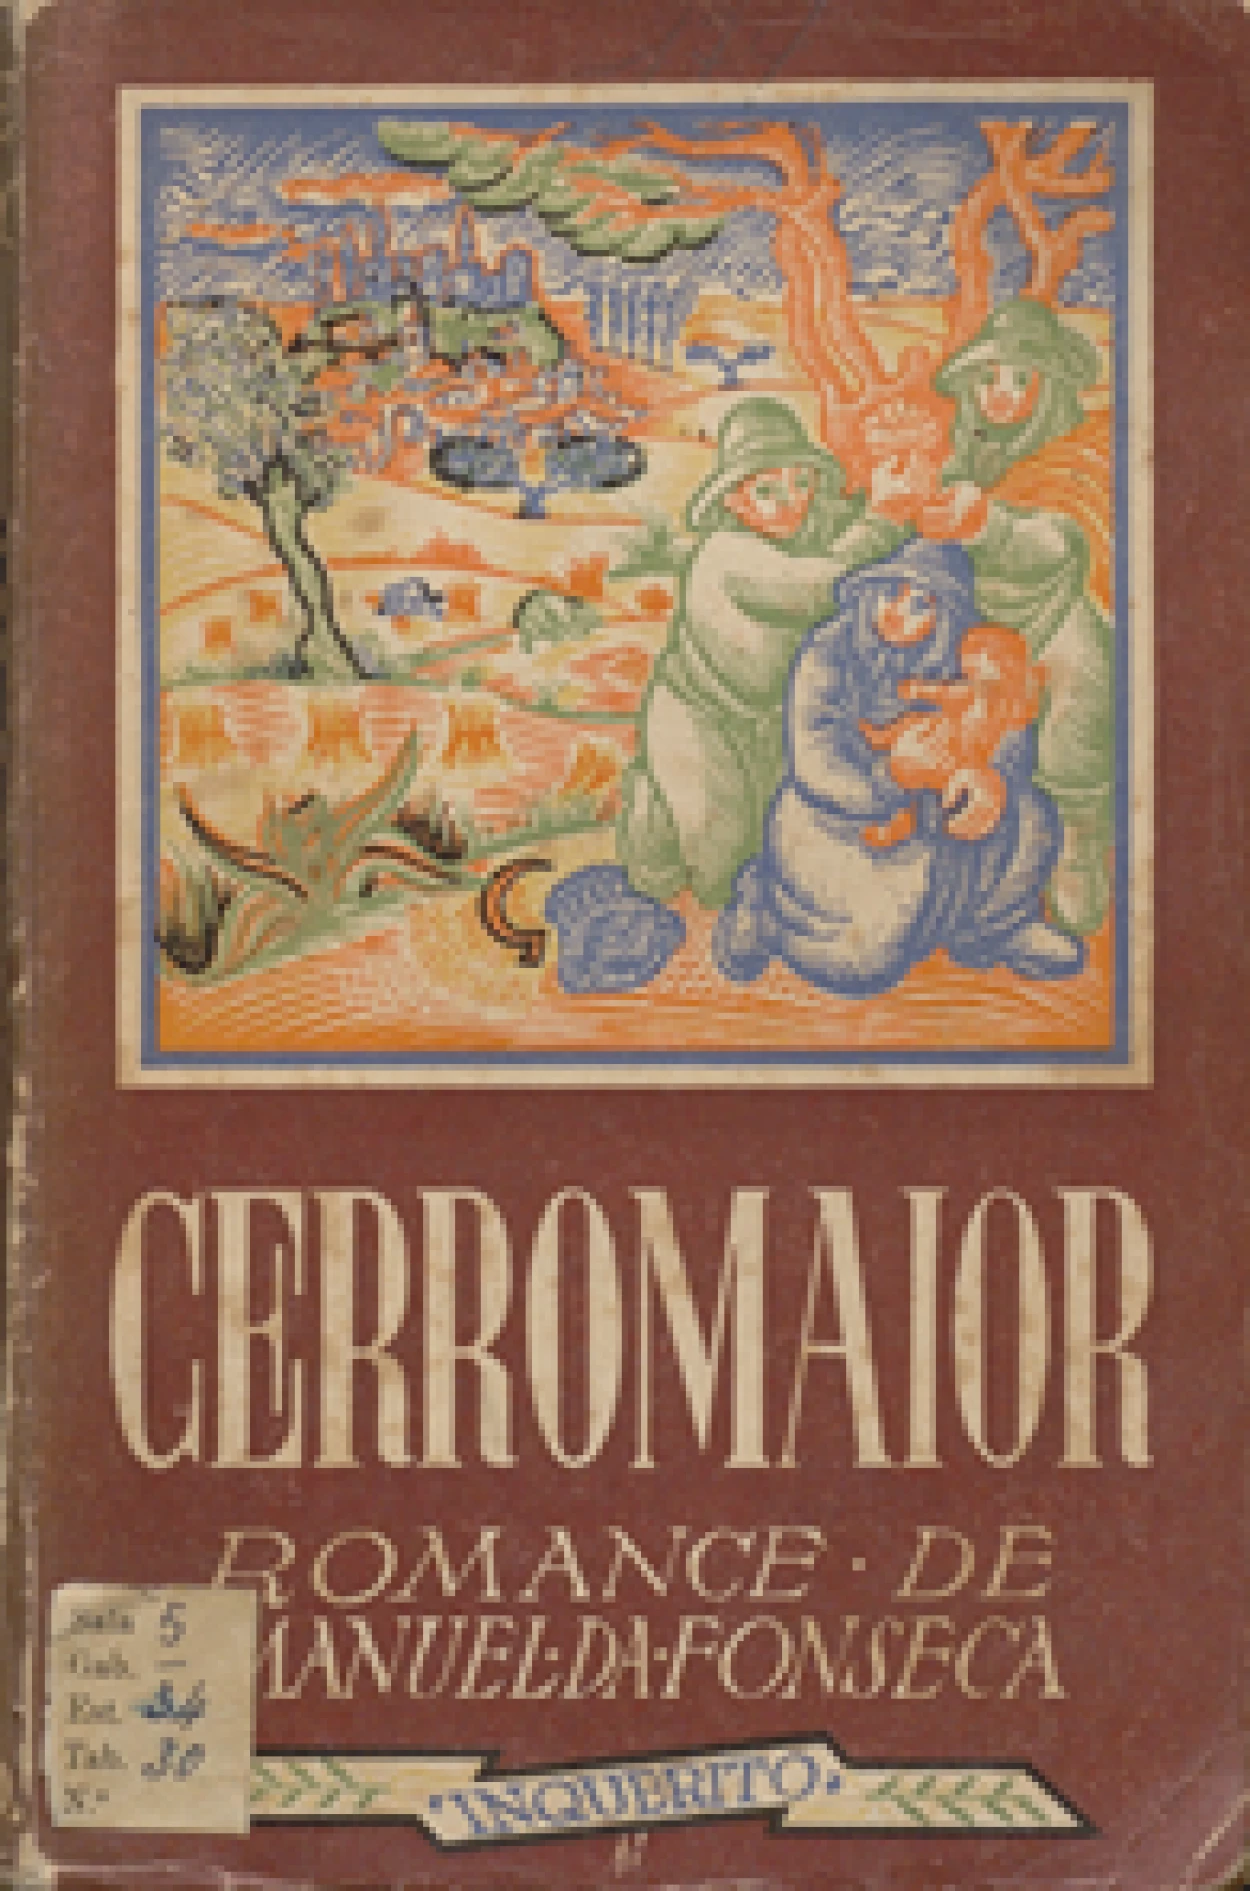 Fonseca, Manuel da, 1911–1993
Cerromaior : romance.
Lisboa : Inquérito, imp. 1943.